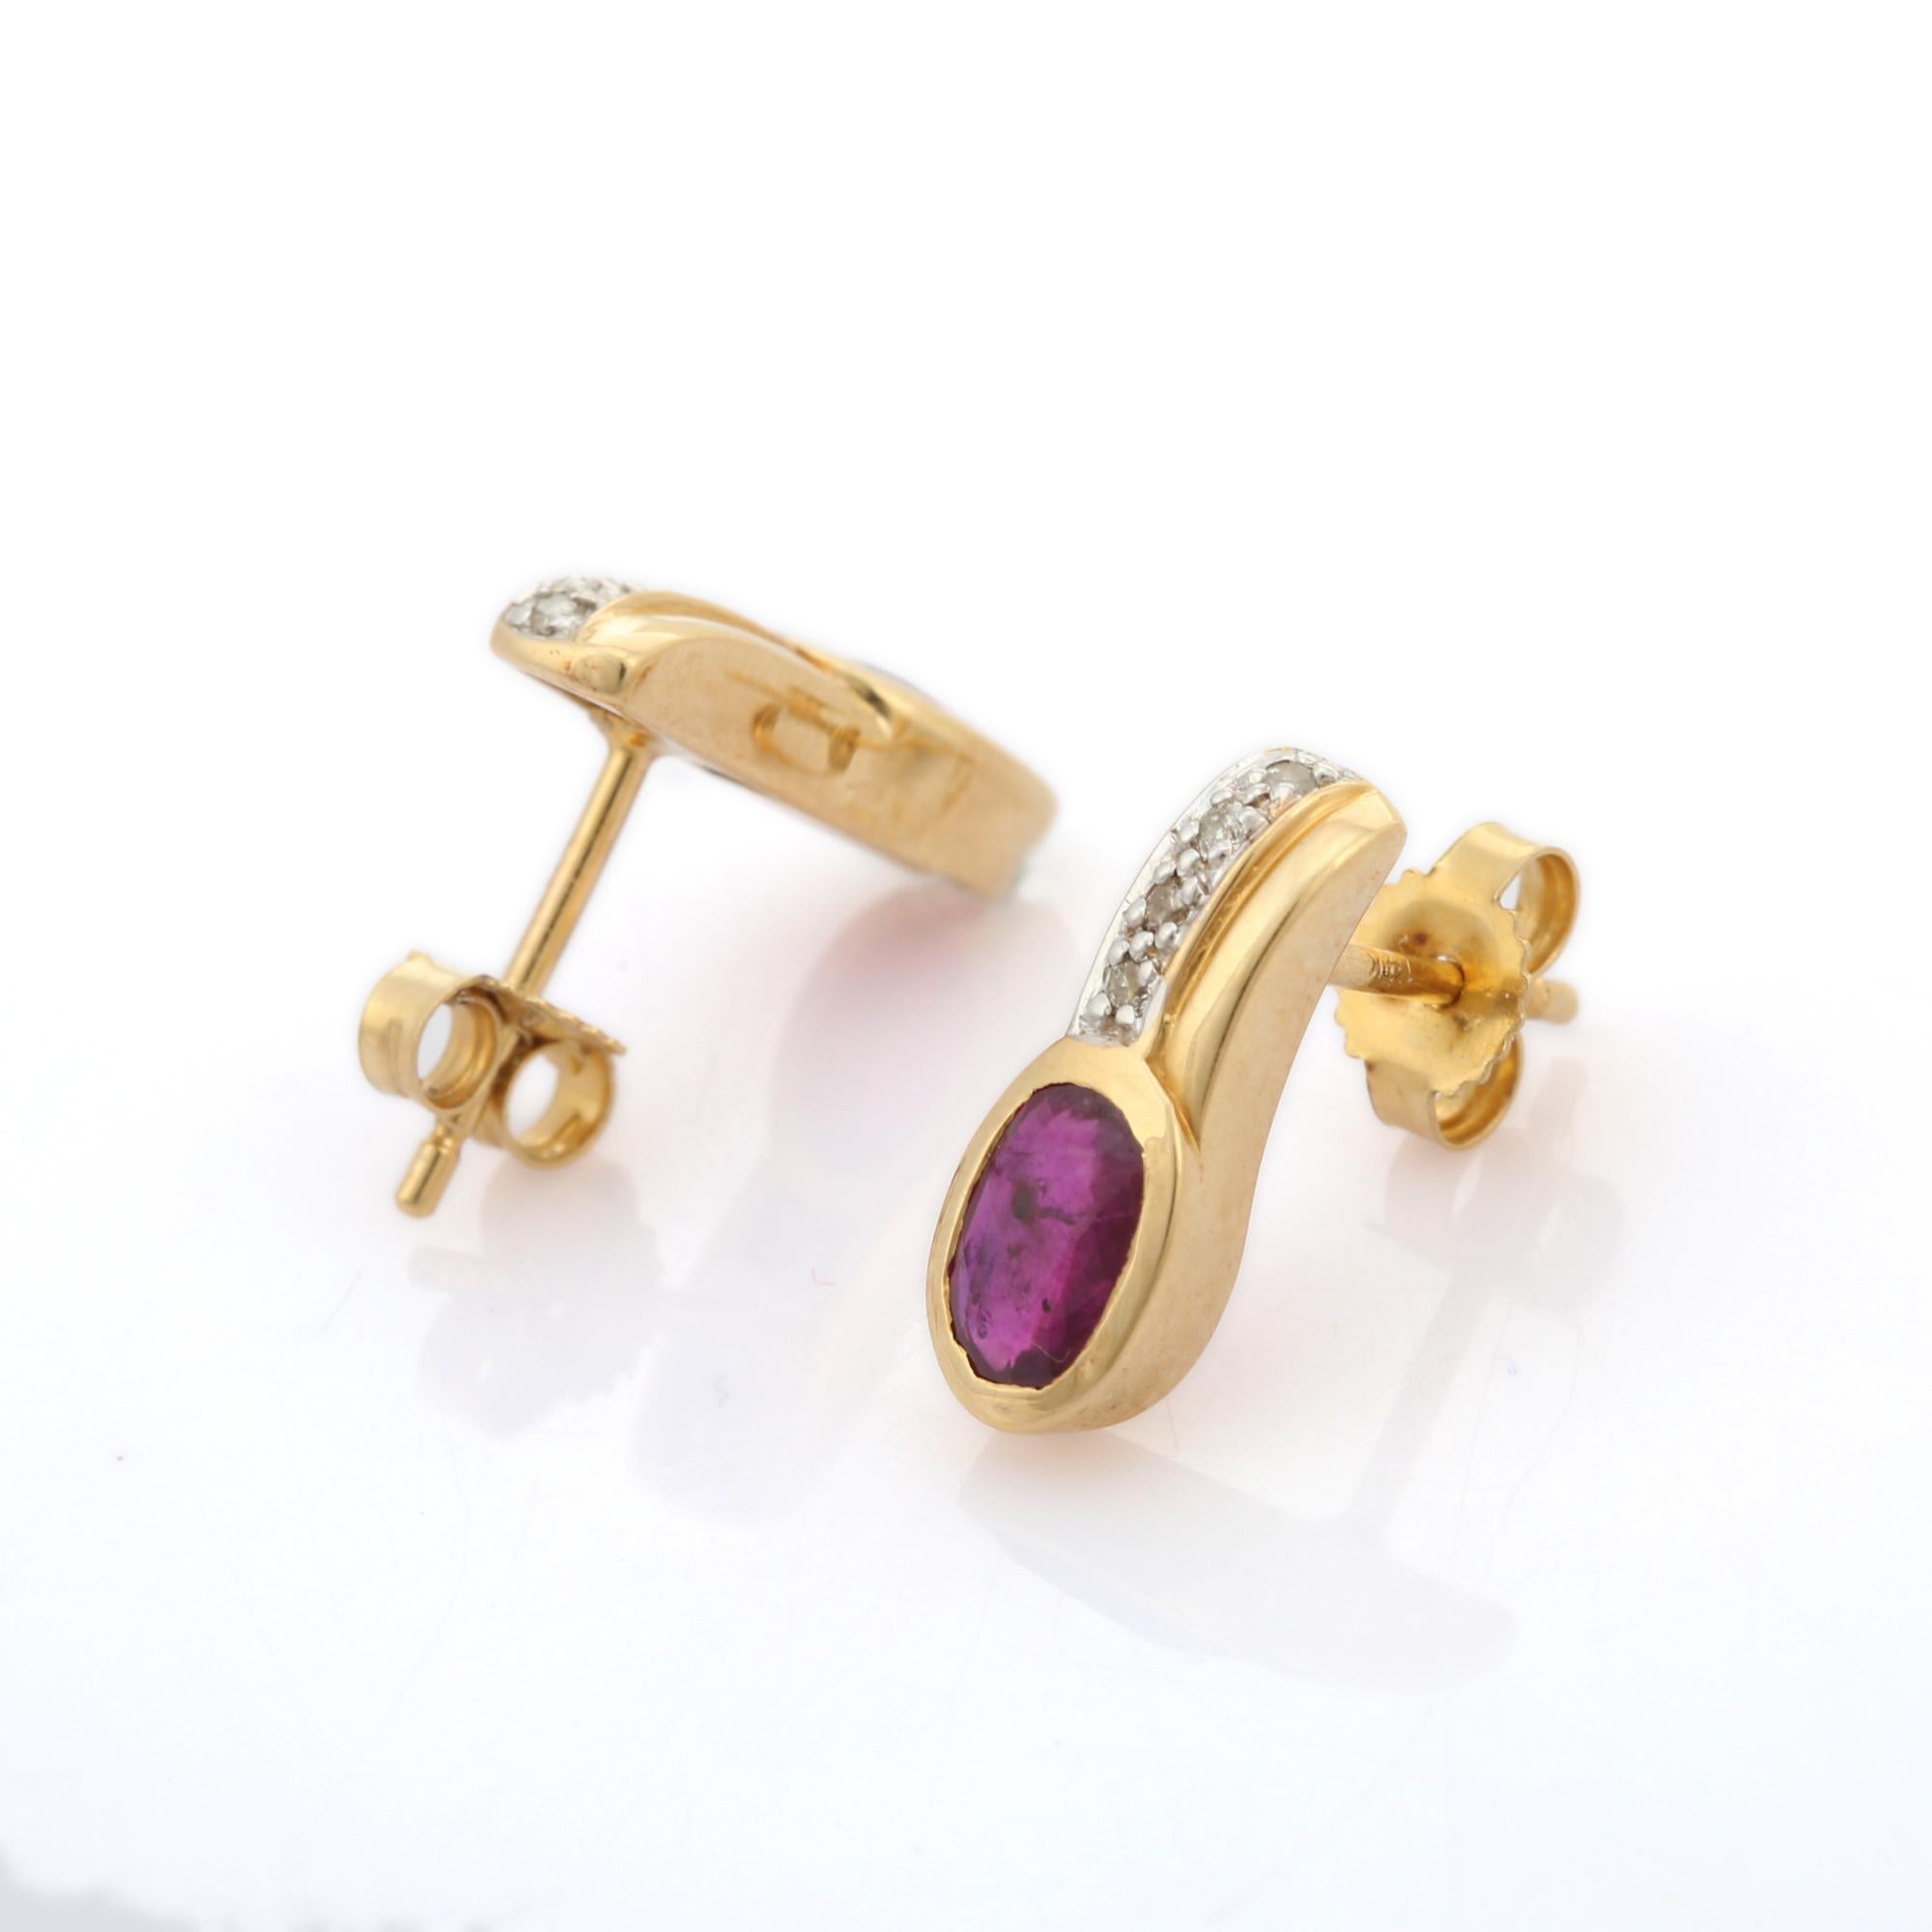 Modern Natural Oval Ruby Diamond Handmade Stud Earrings For Women in 14K Yellow Gold For Sale